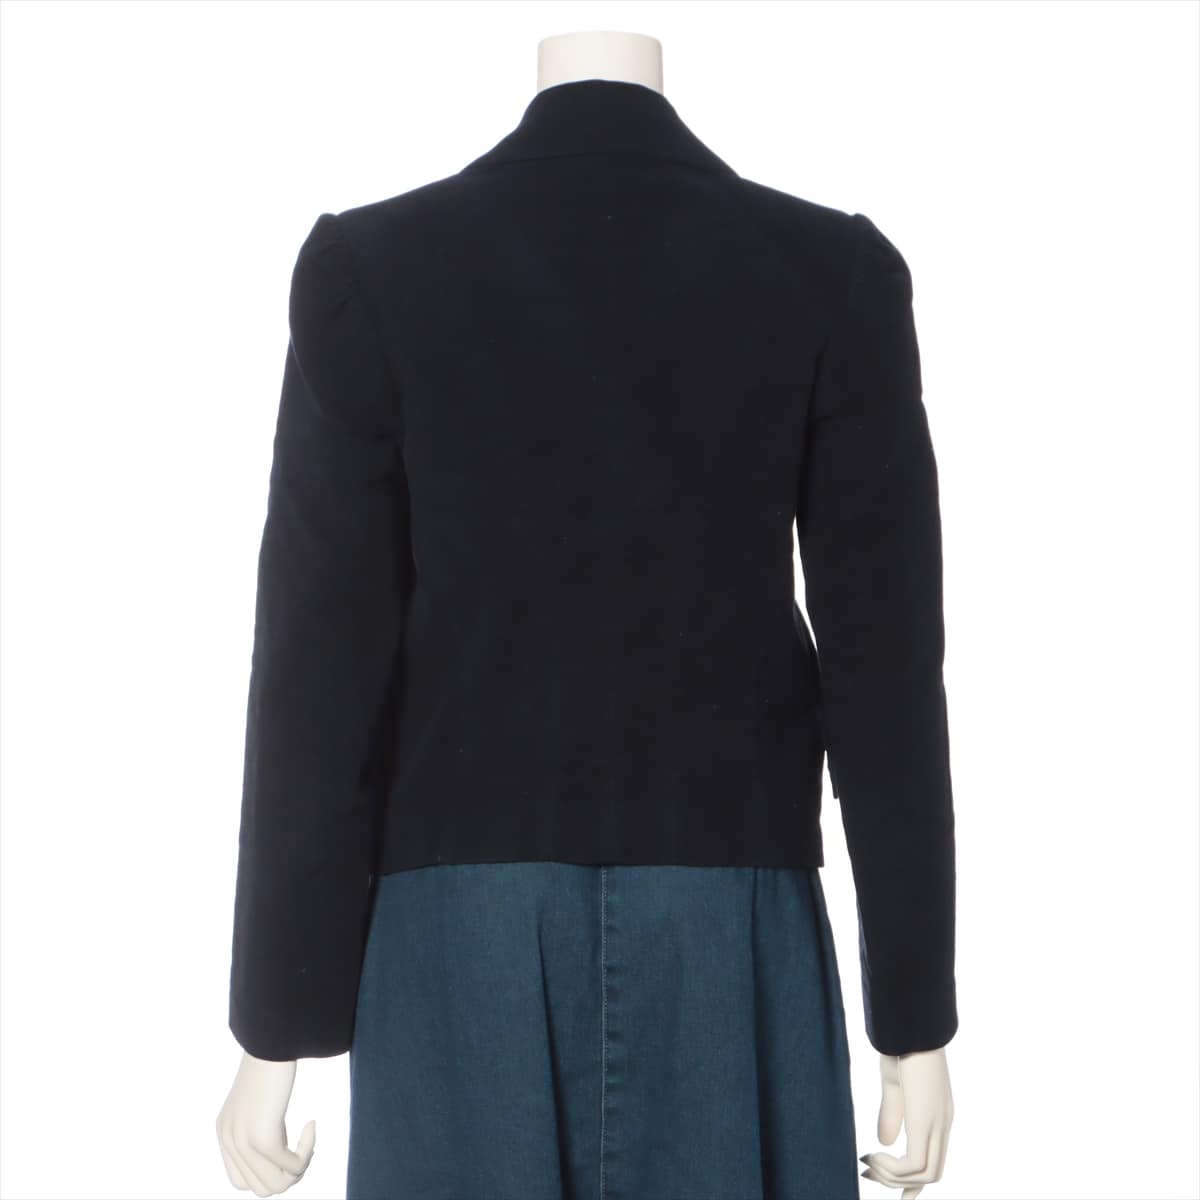 Vivienne Westwood RED LABEL Cotton & polyurethane Tailored jacket 2 Ladies' Navy blue